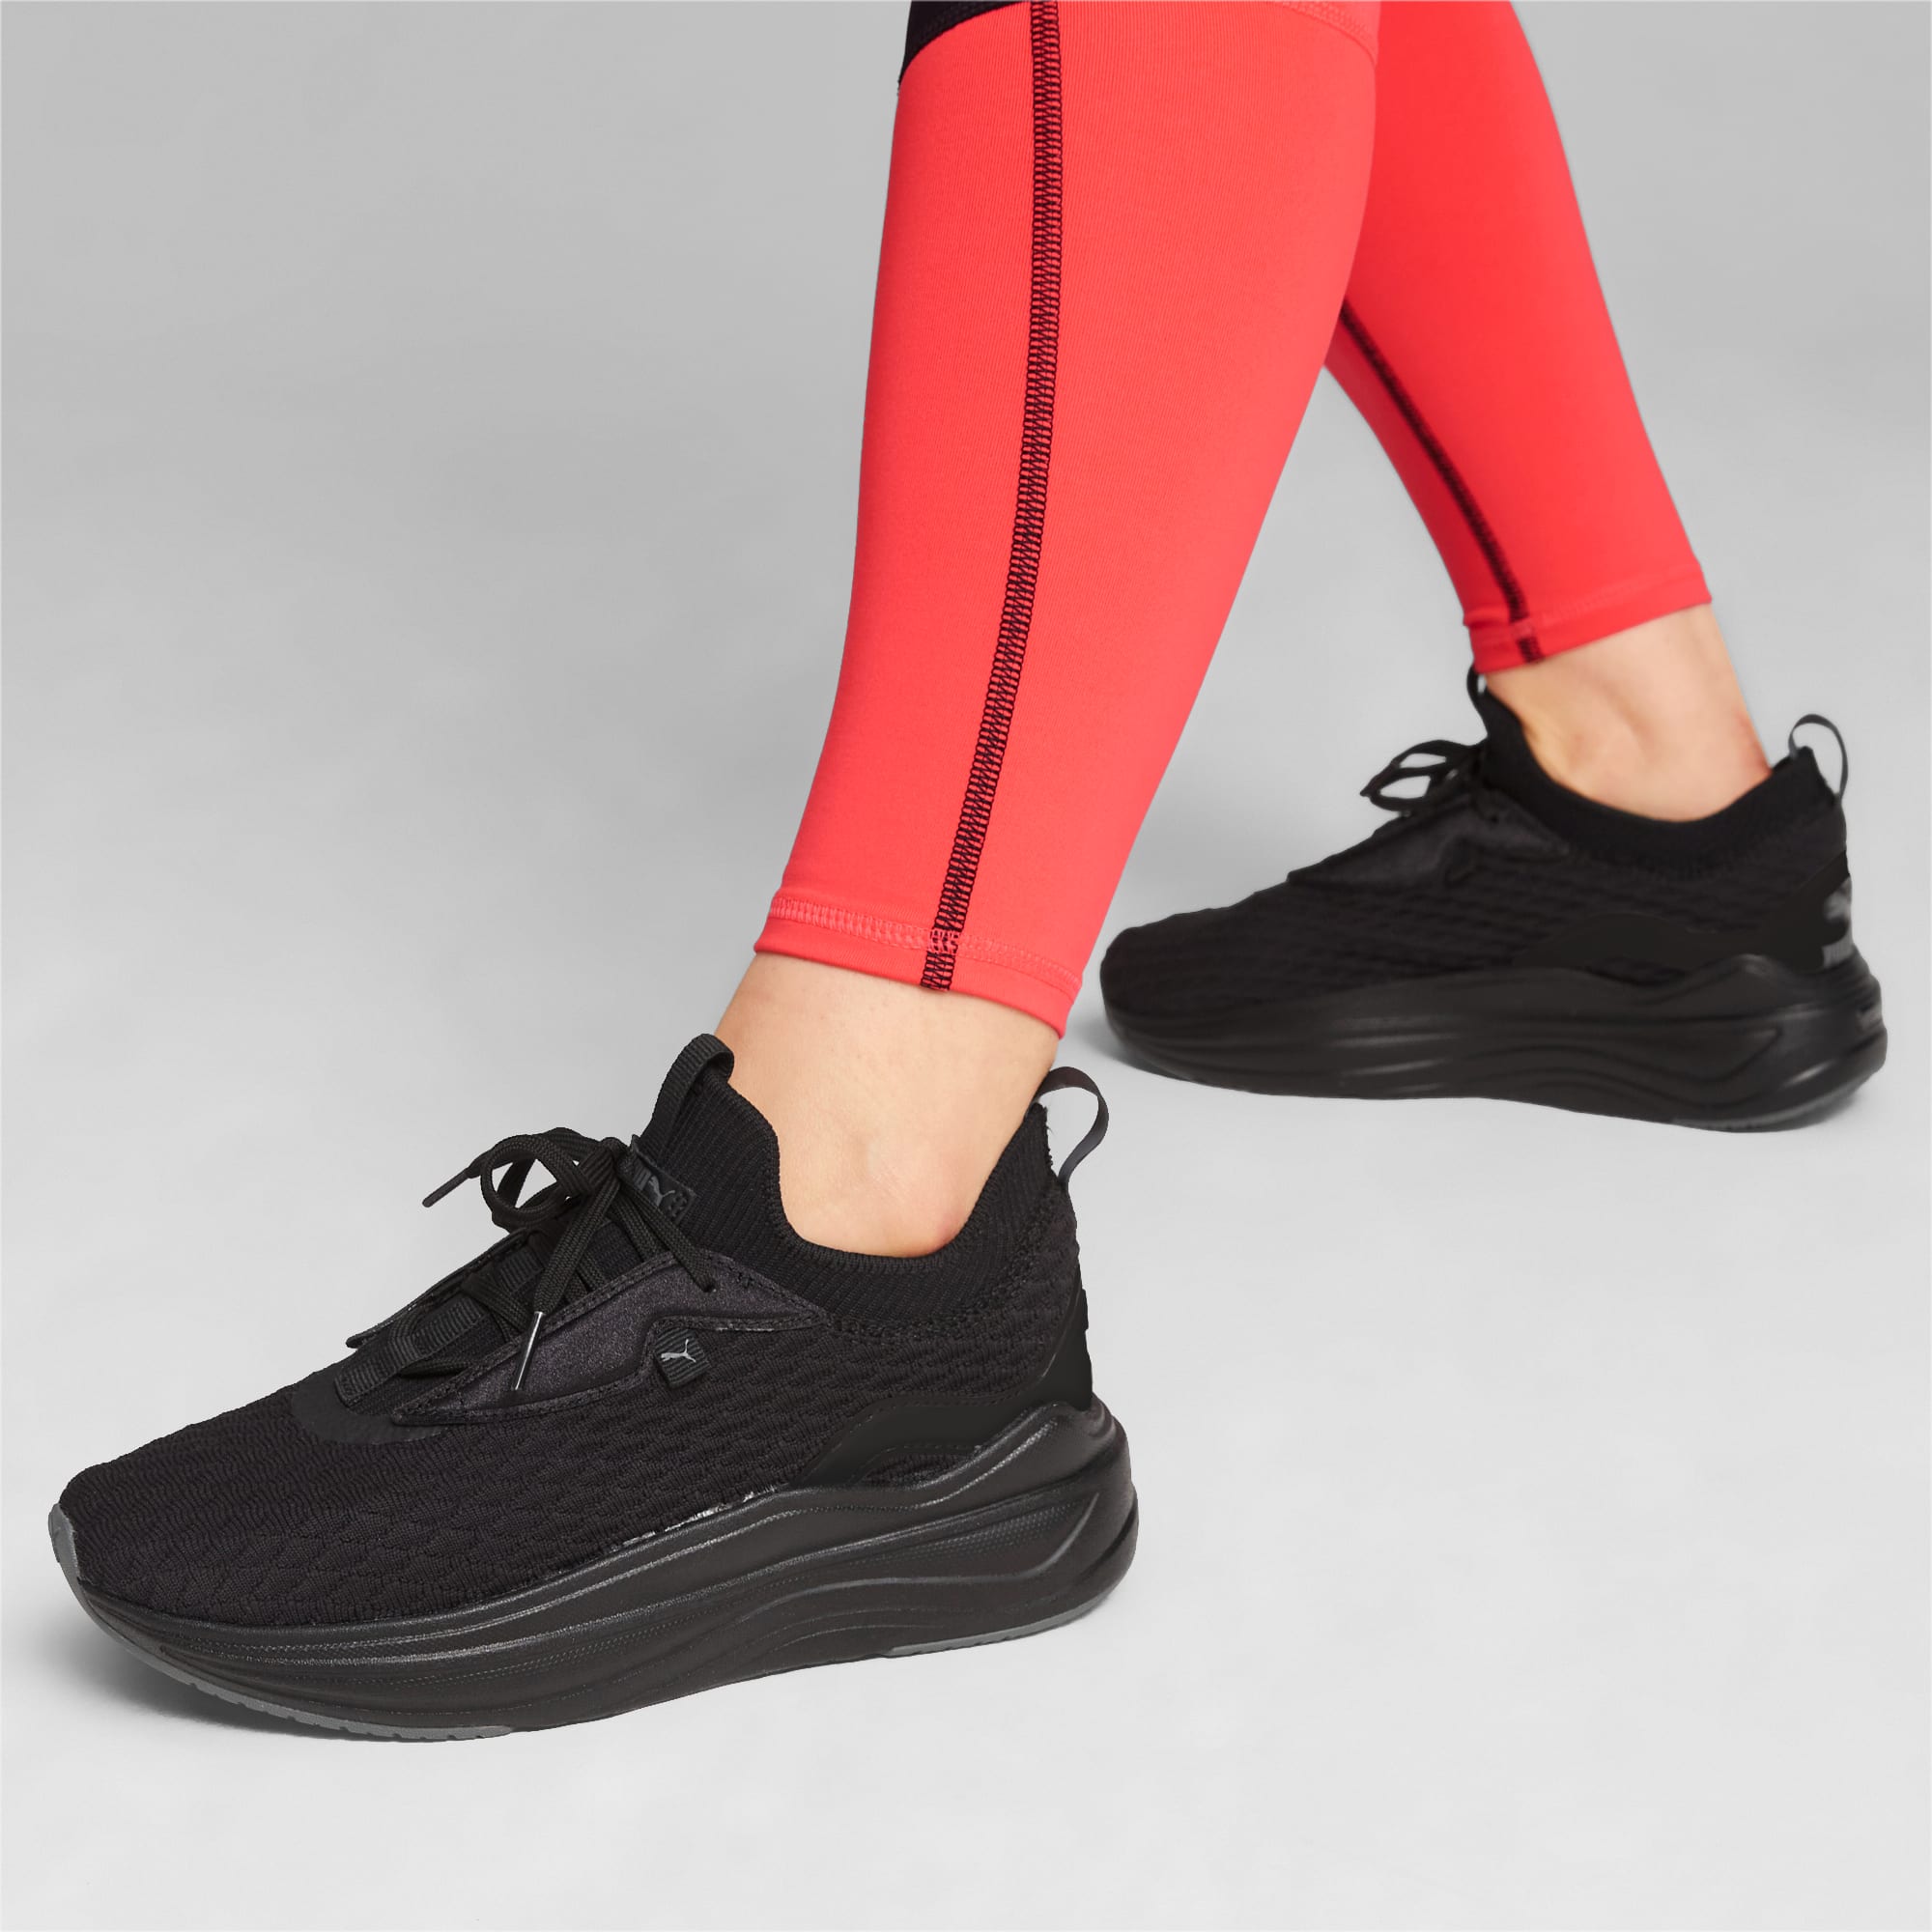 PUMA Chaussures De Running Softride Stakd Premium Femme, Noir/Gris